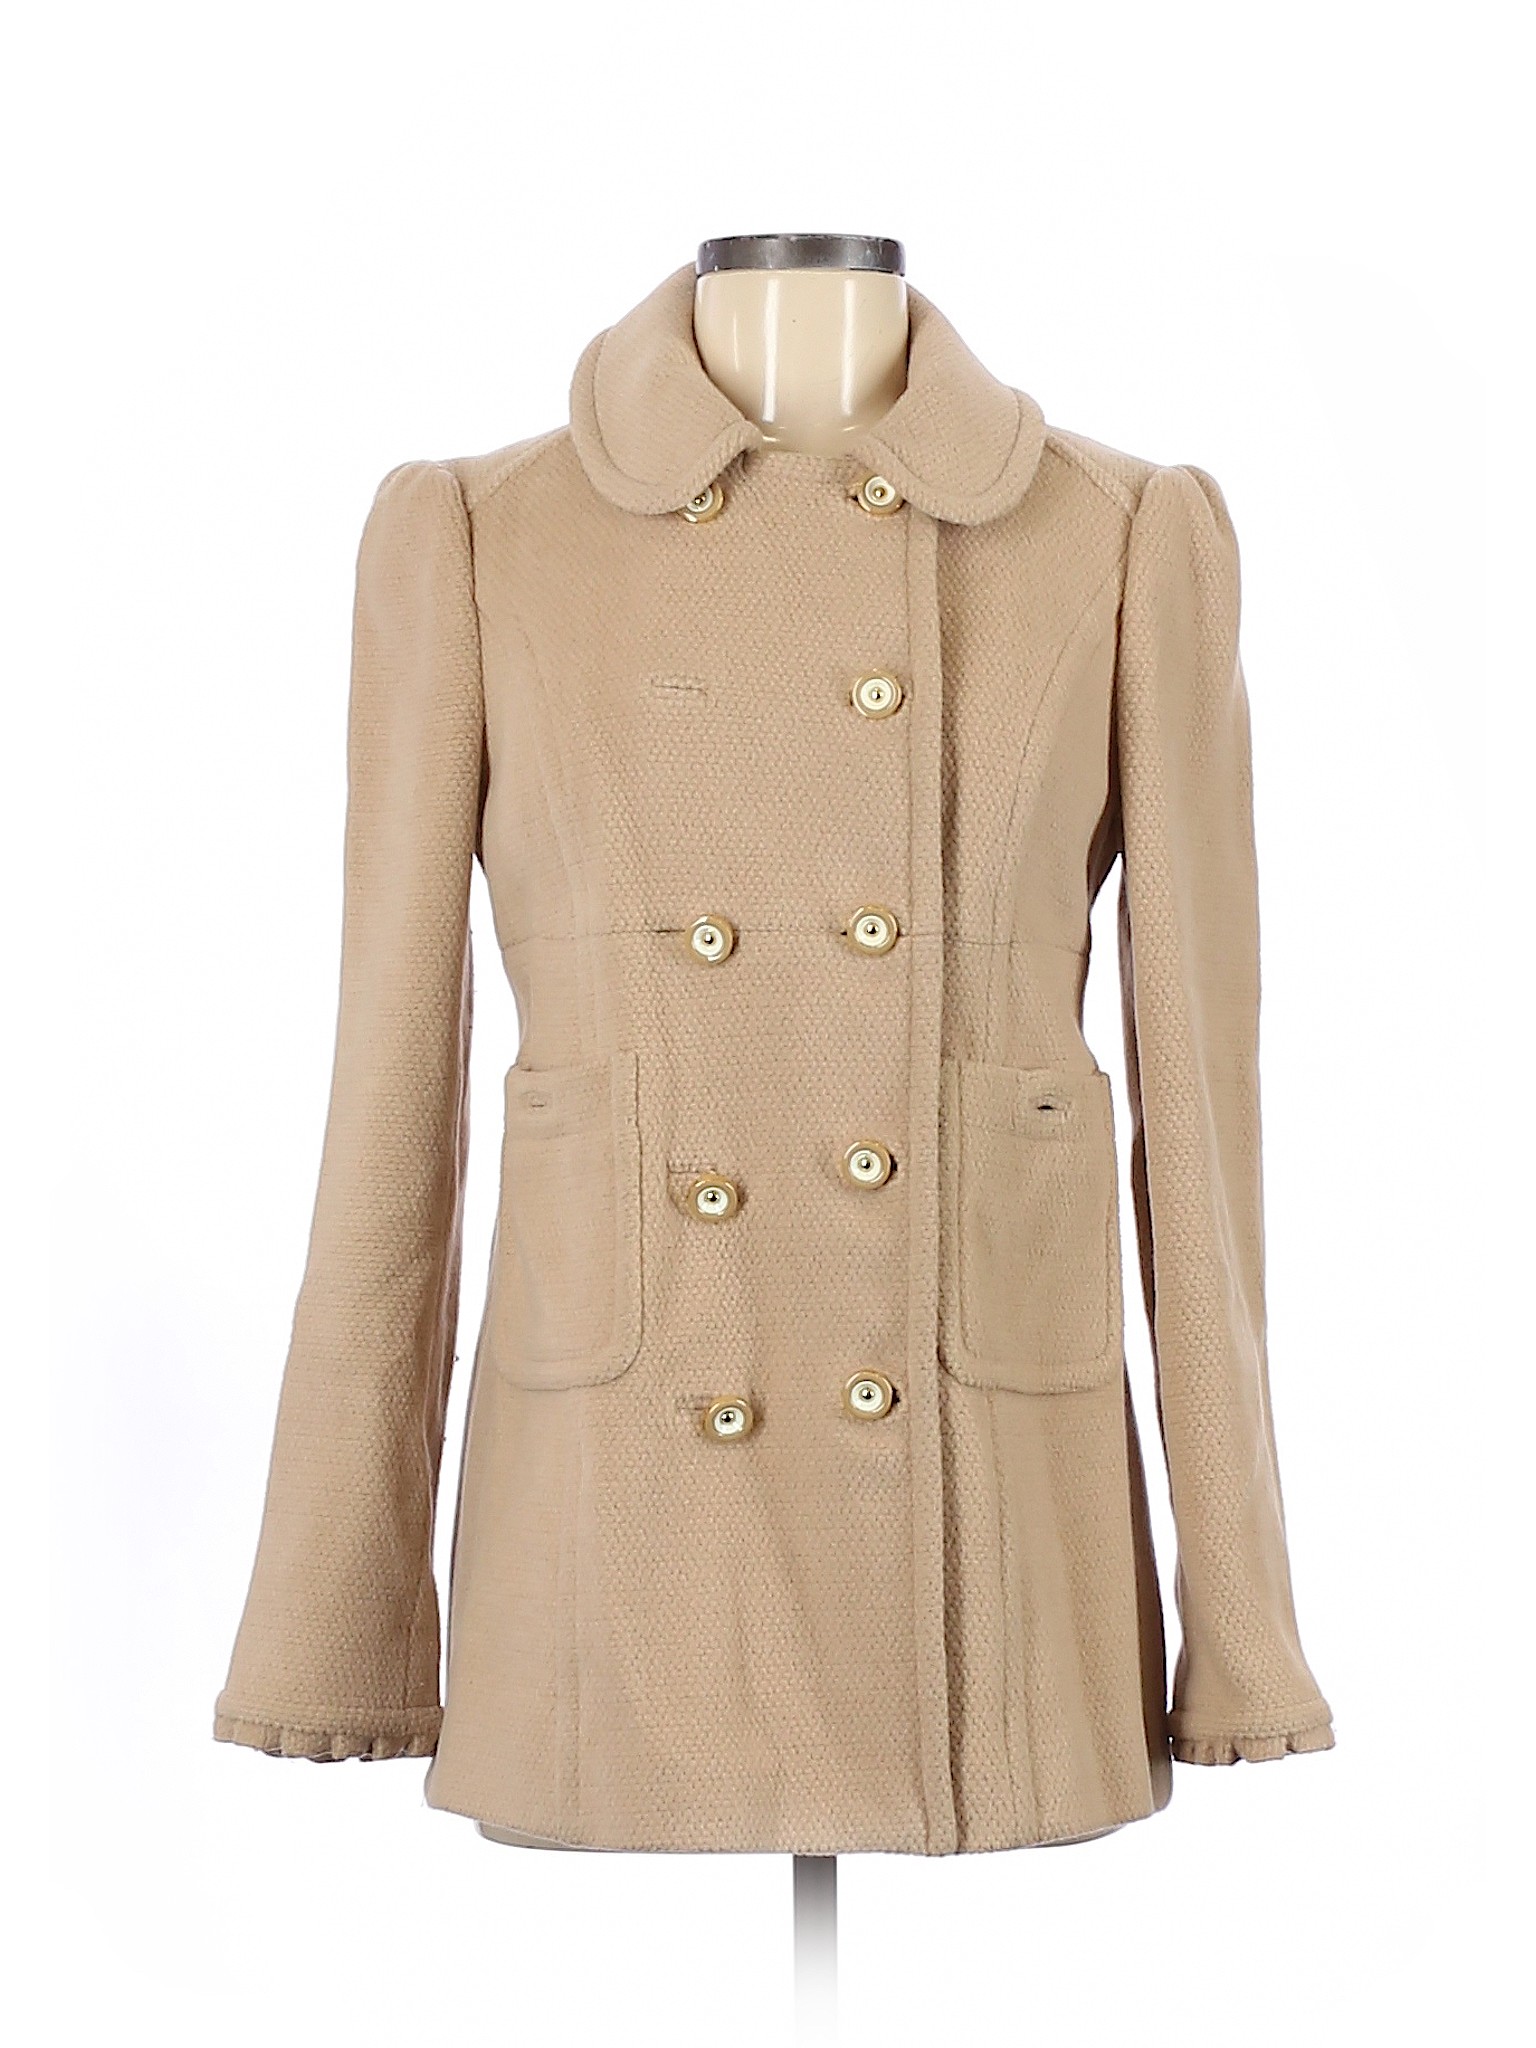 Juicy Couture Women Brown Wool Coat M | eBay